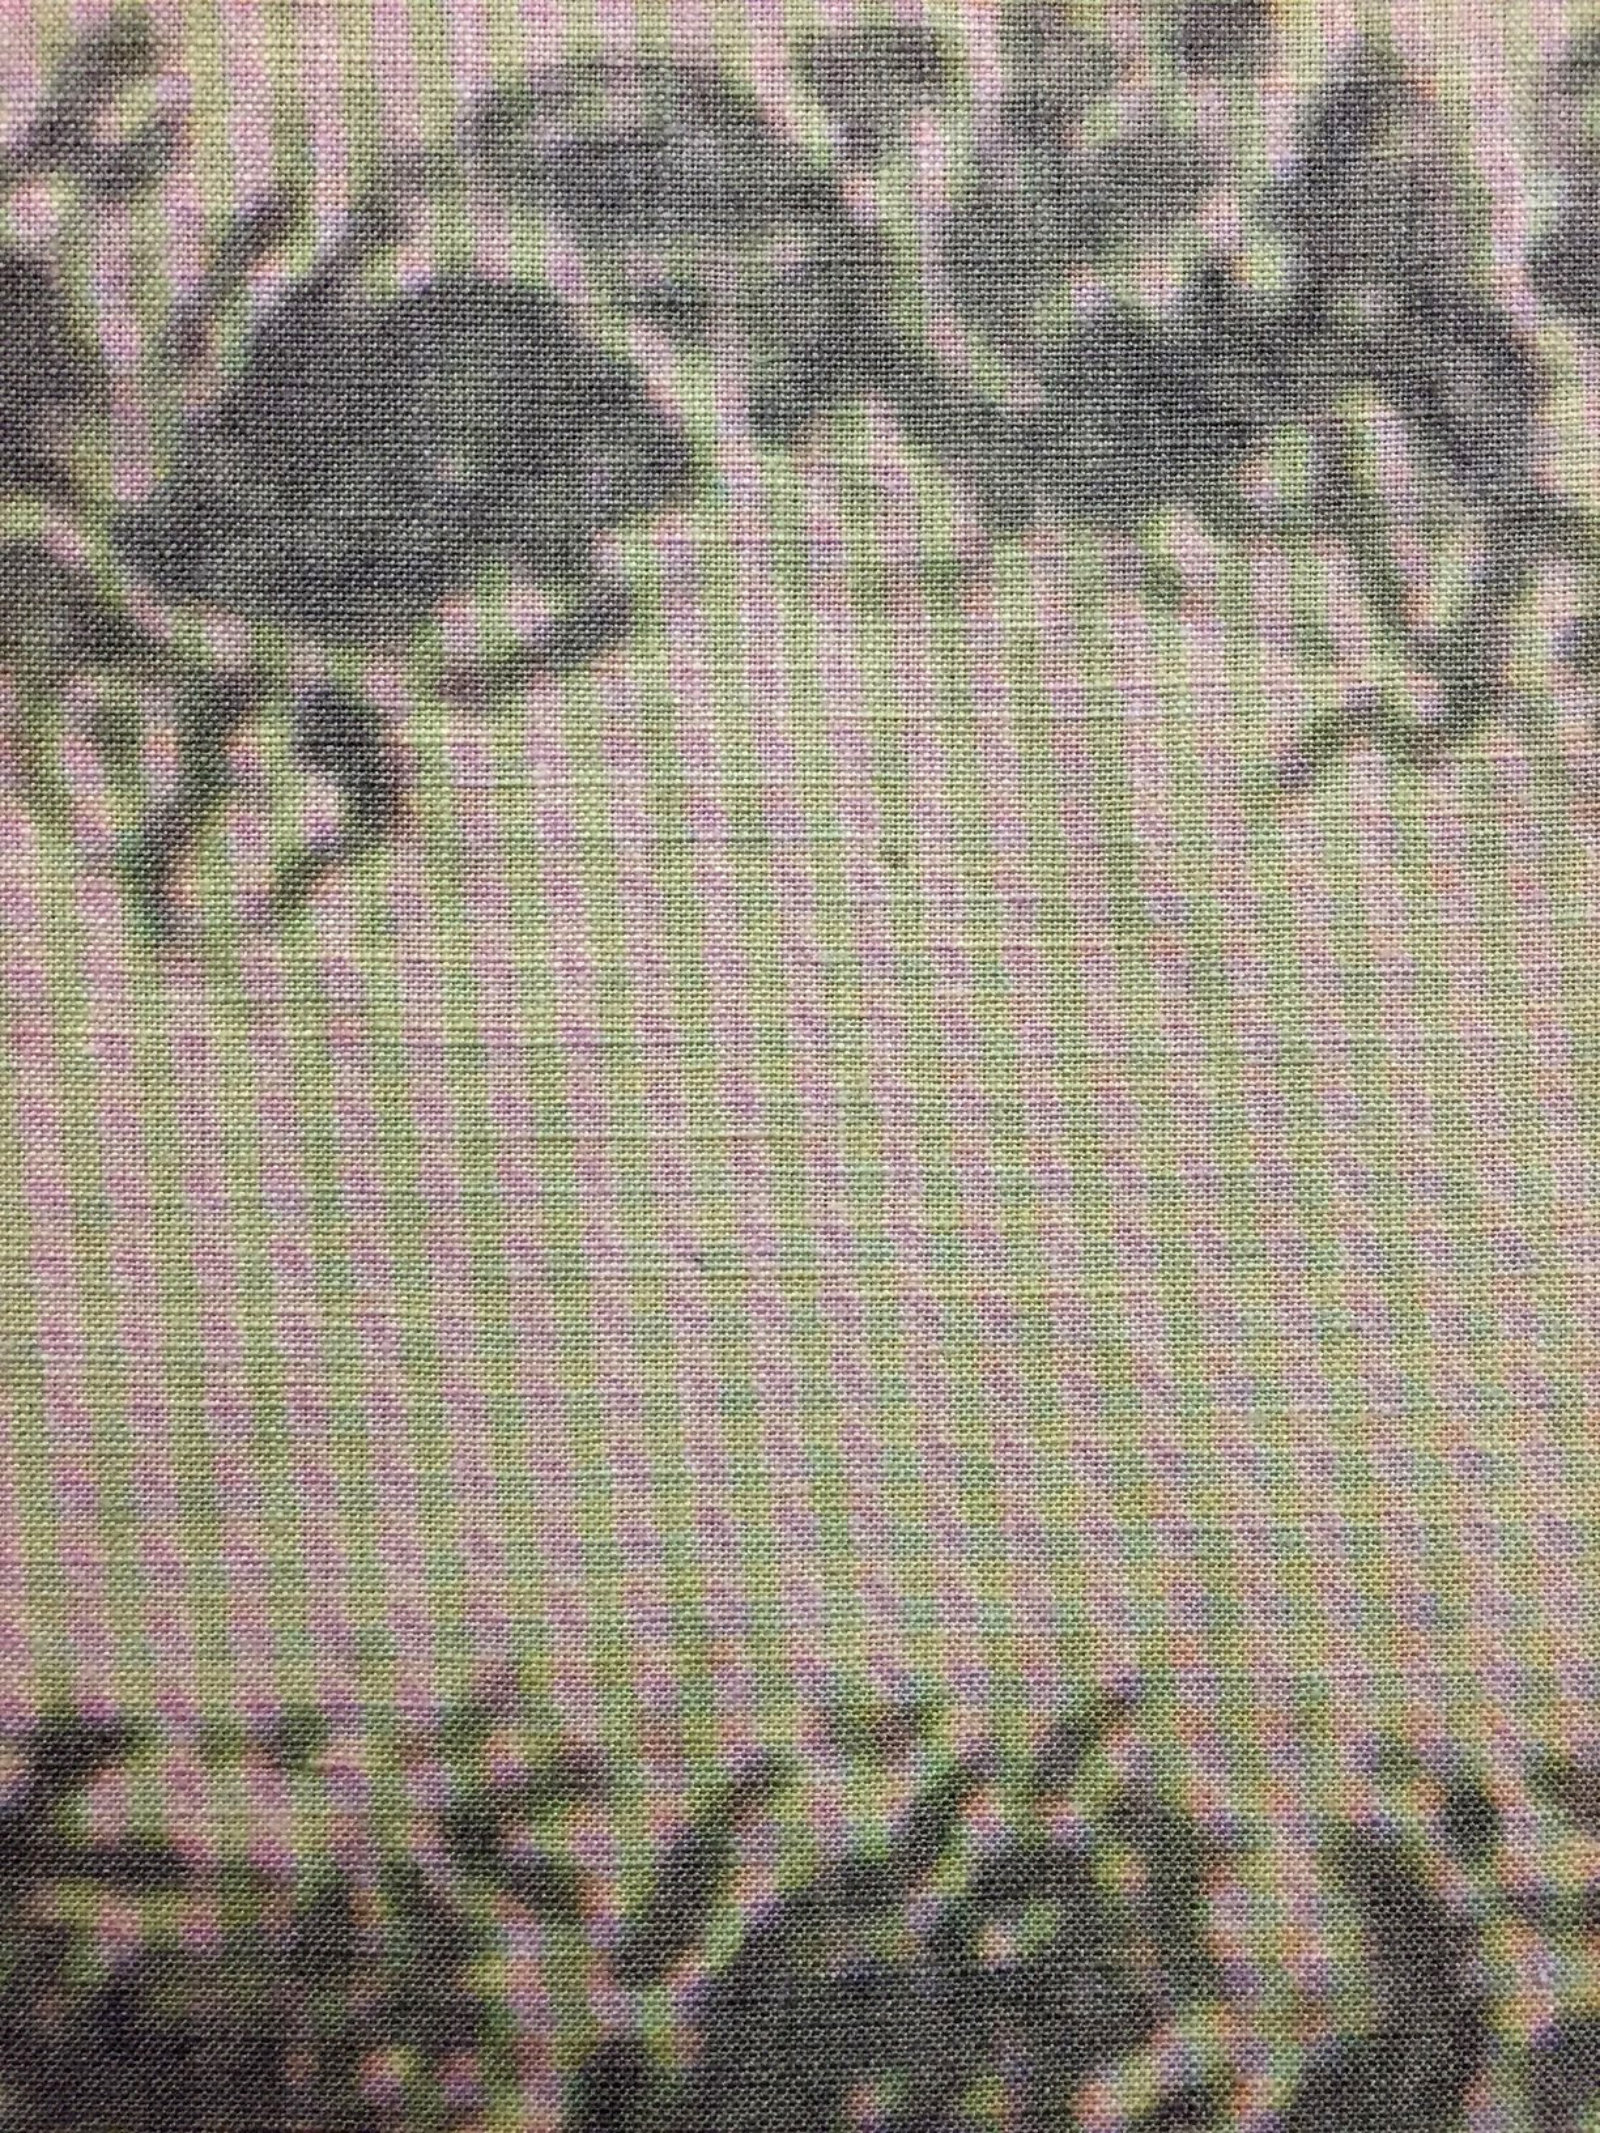 Duane Linklater, UMFA 1974.079.091.050 (detail), 2015, inkjet print on linen, nails, from Navajo Saddle Blanket, Utah Museum of Fine Arts Collection, 85 x 44 in. (216 x 112 cm)